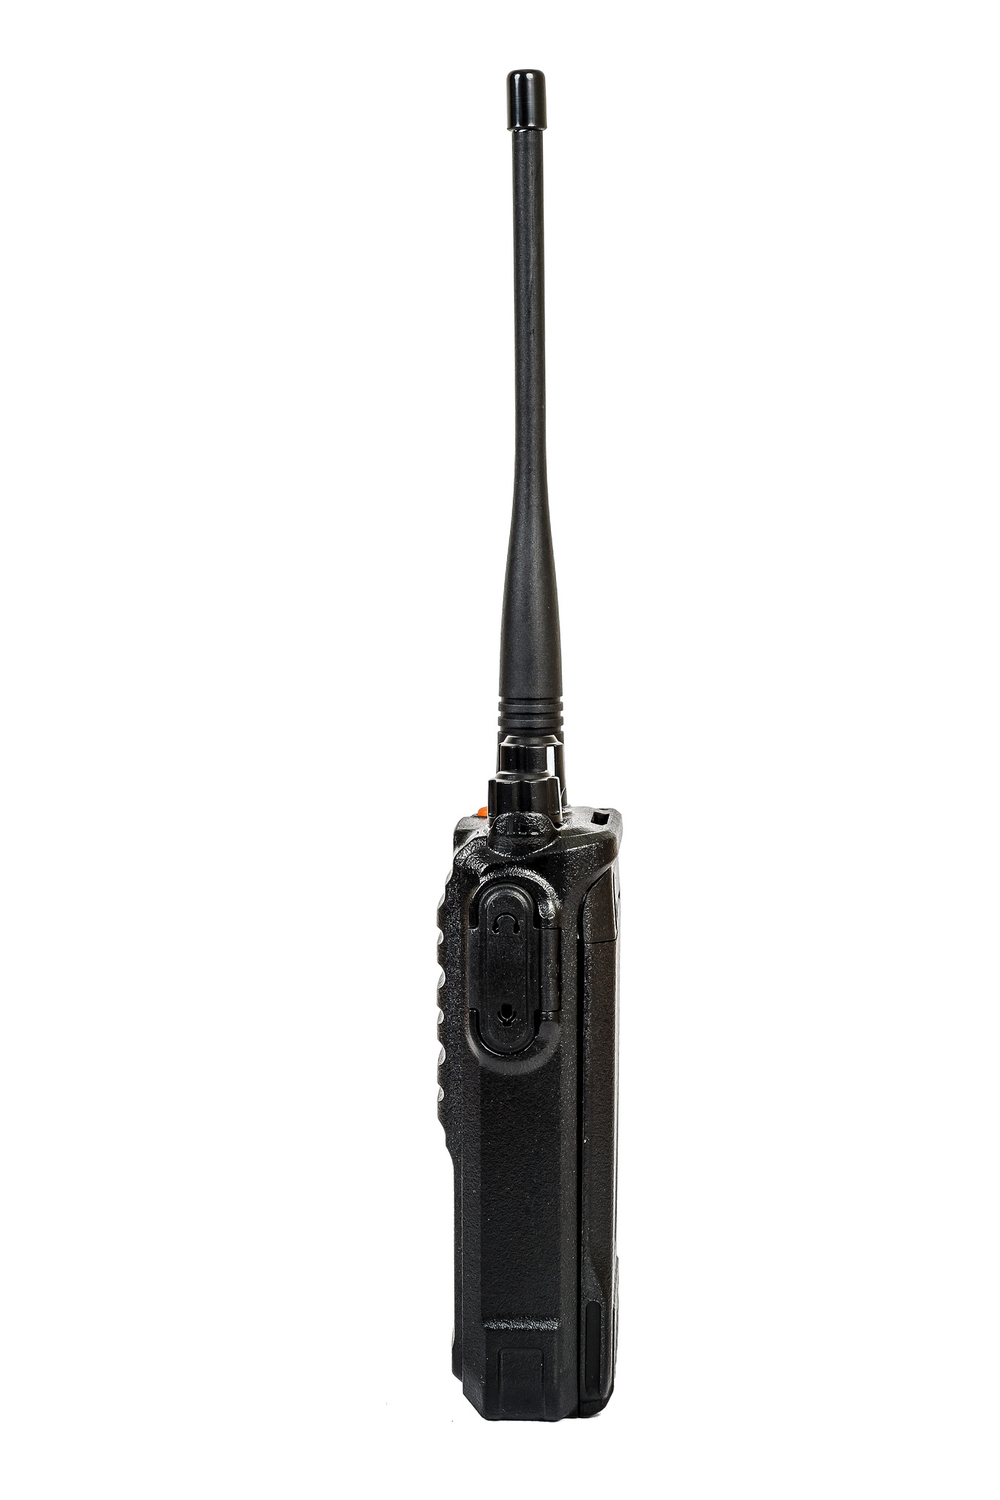 РАДИОСТАНЦИЯ LIRA DP-200V DMR (VHF)